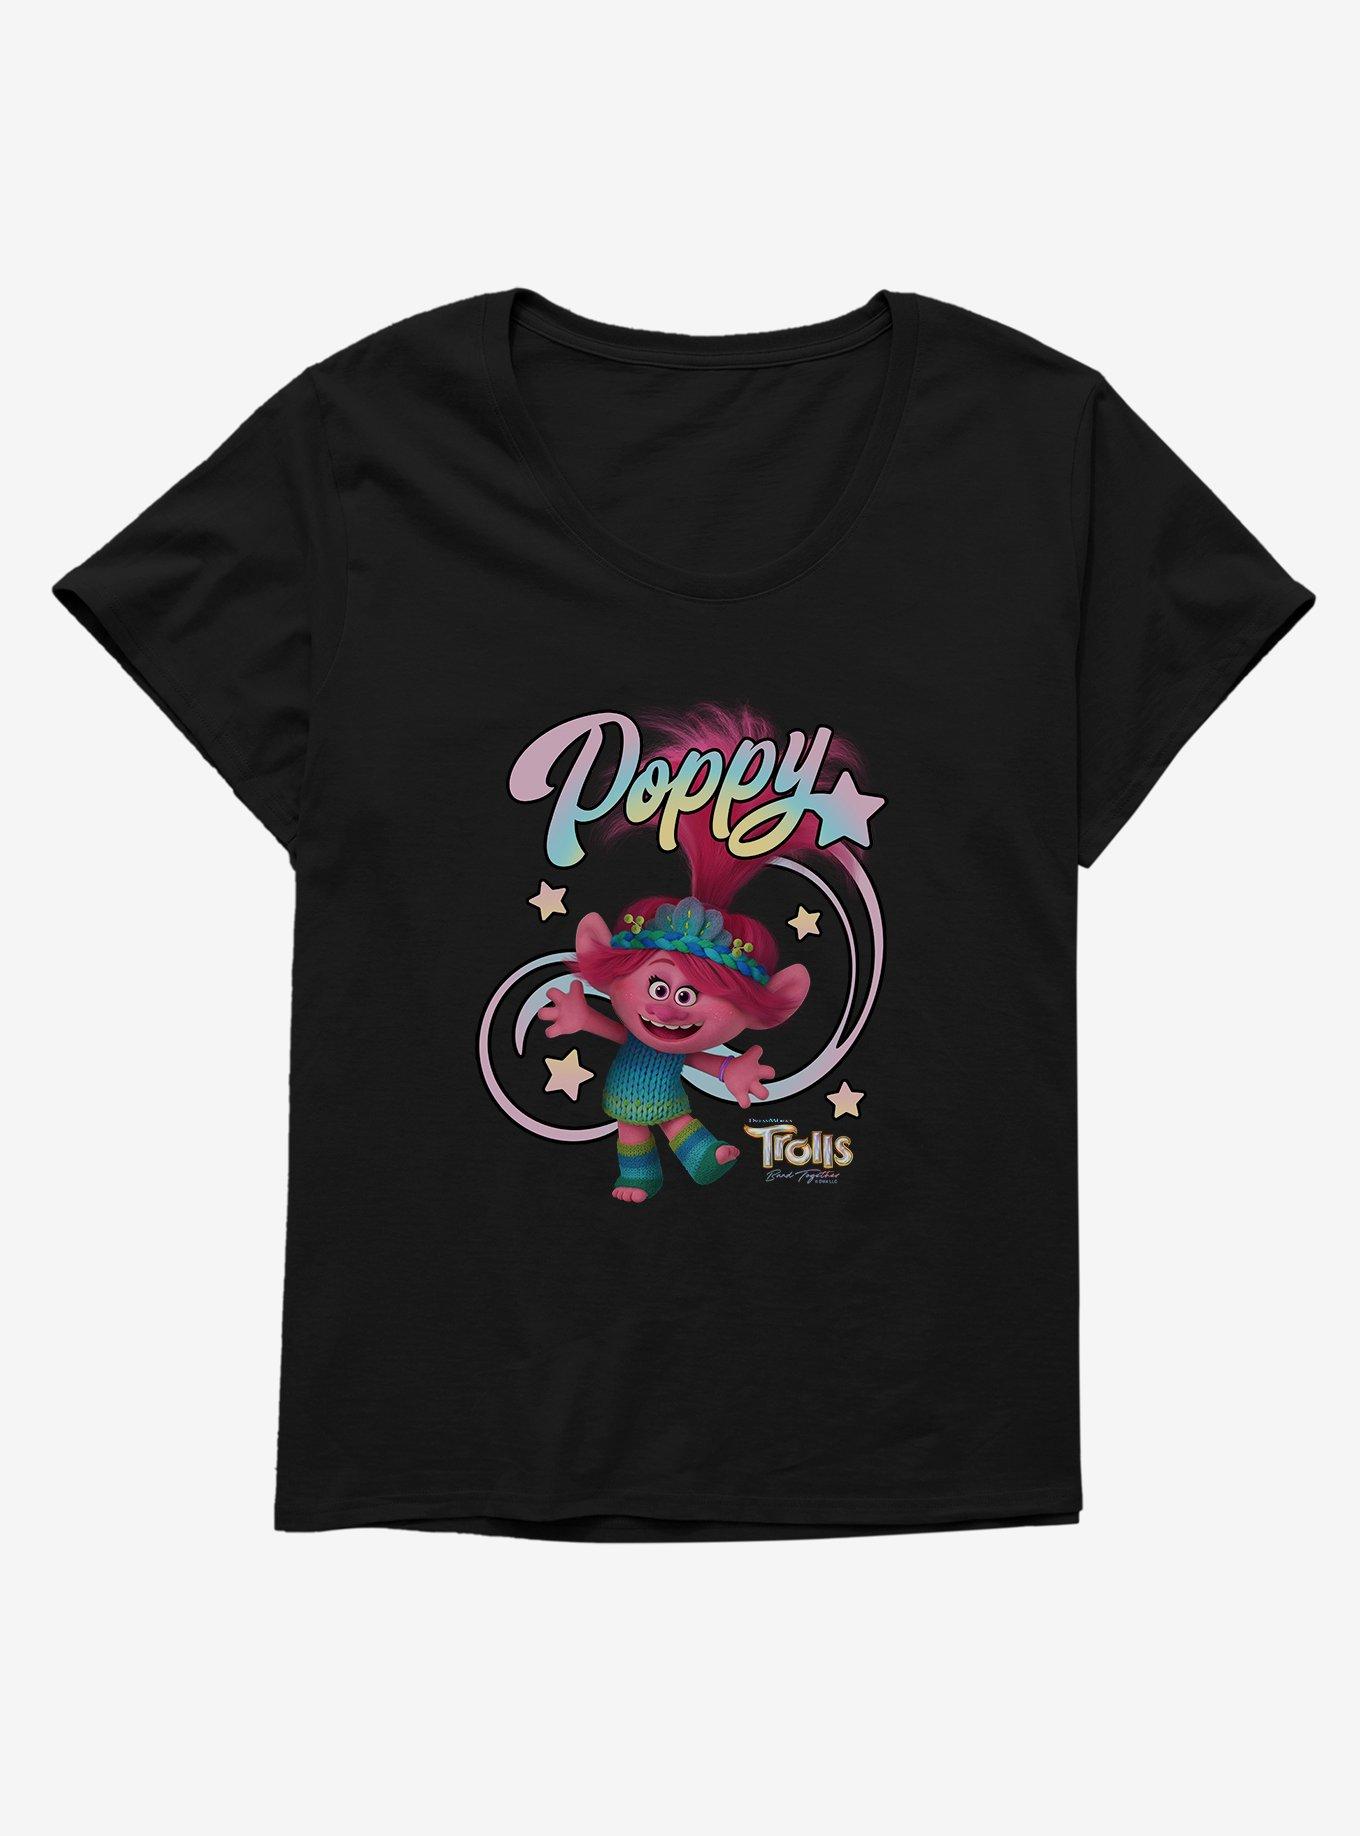 Trolls 3 Band Together Poppy Girls T-Shirt Plus Size, BLACK, hi-res